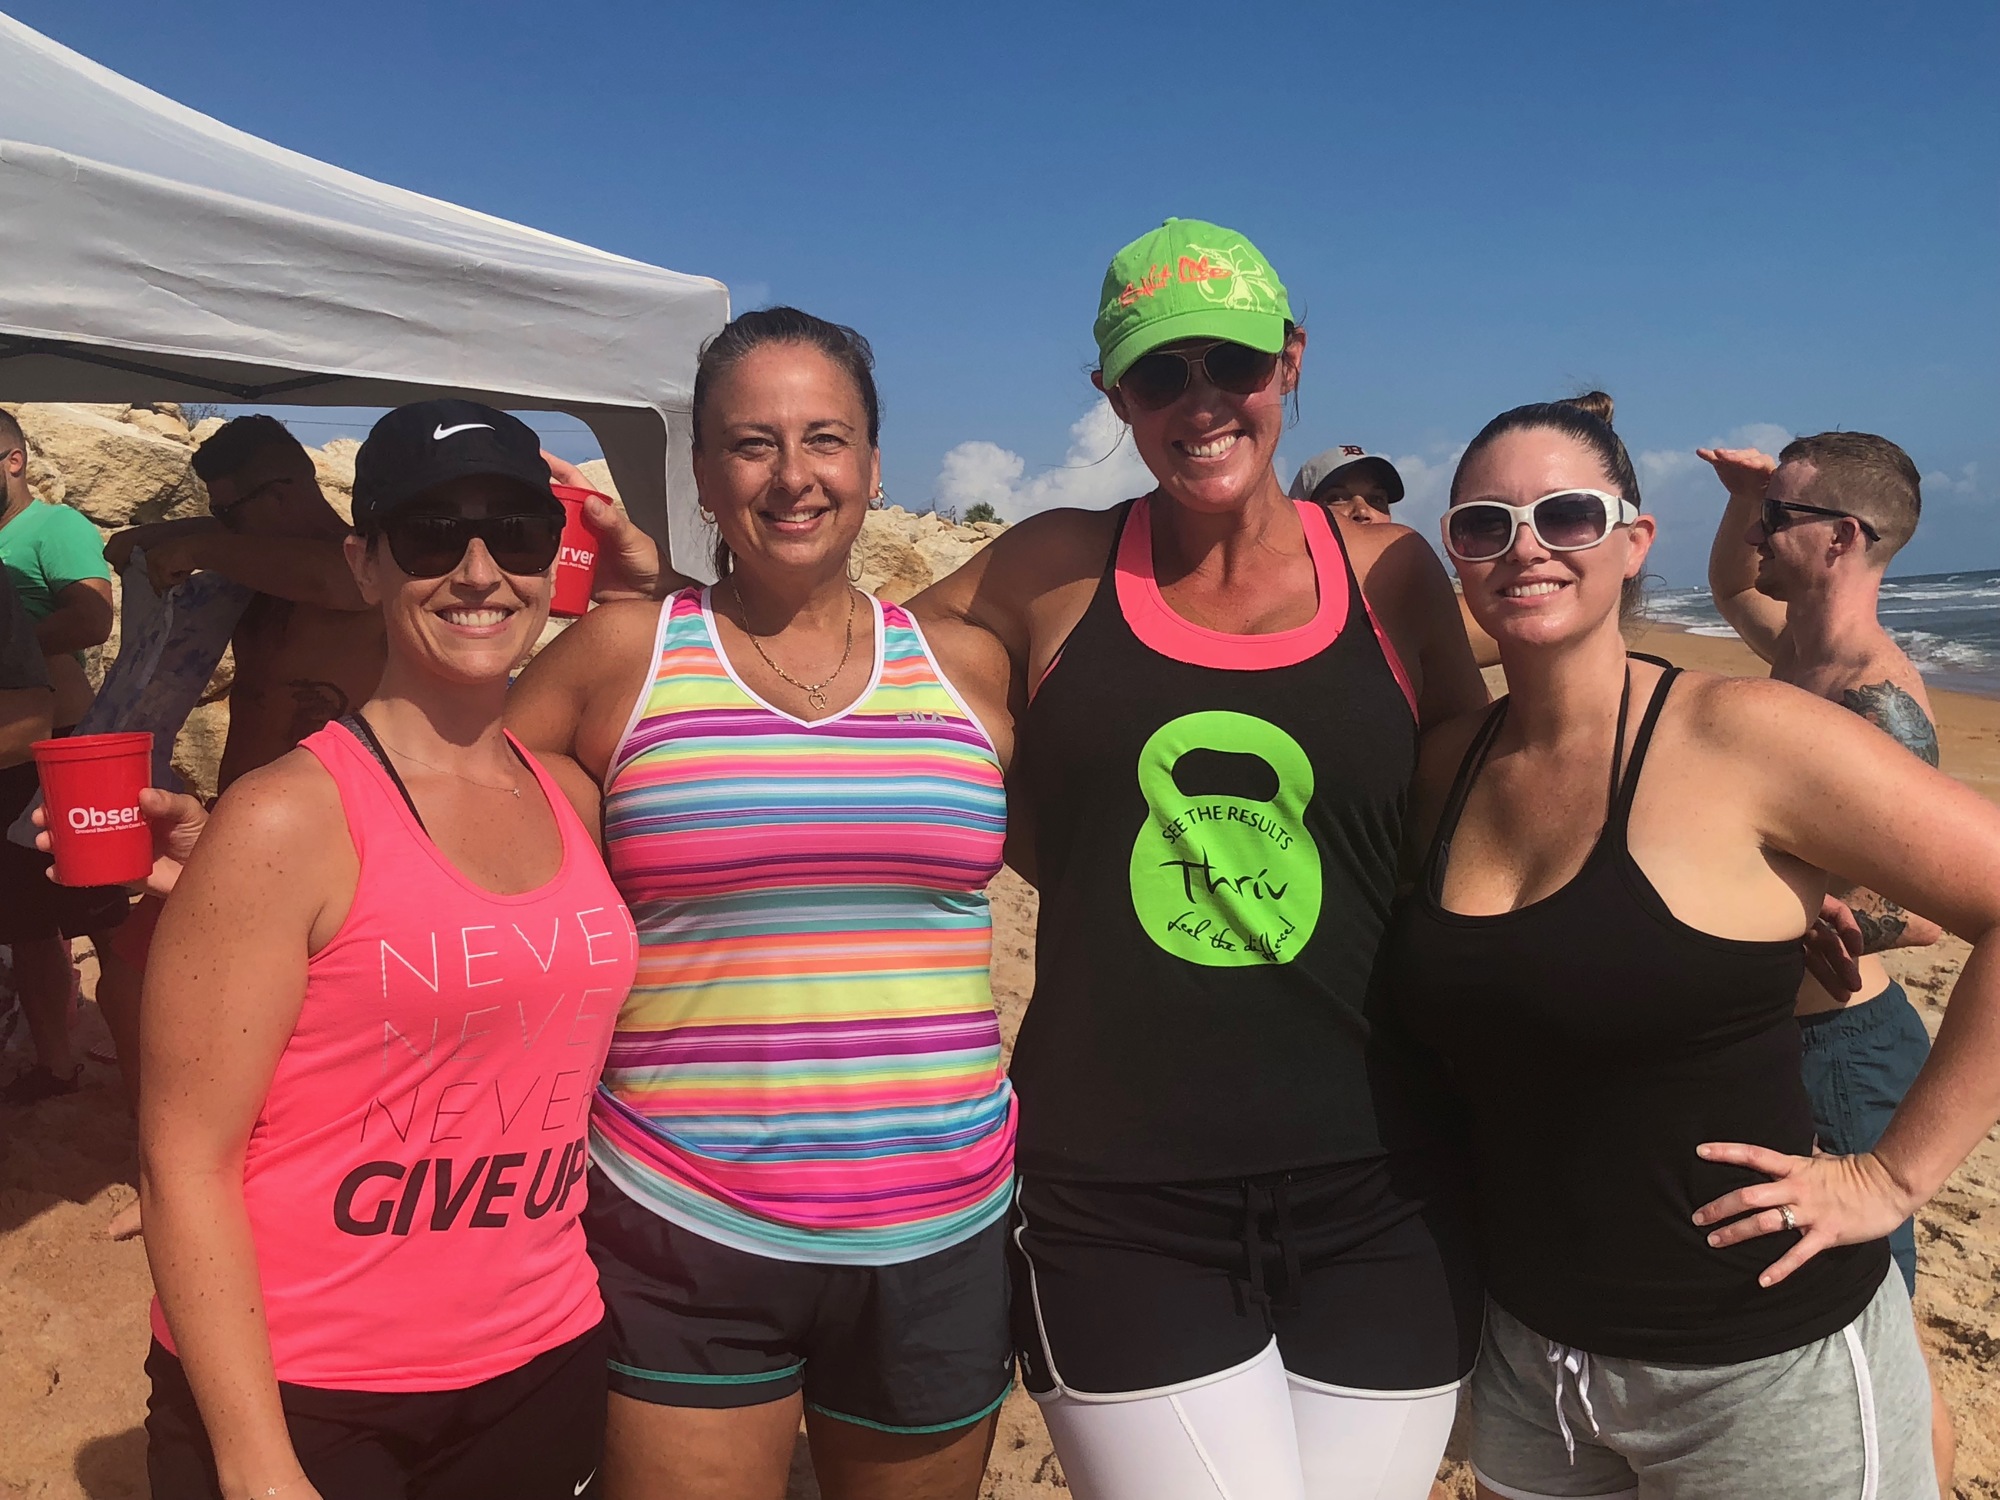 Christine Gaspar, Ashley DeMaio, Hilary O’Boyle and Traci Lavino were the winning team at the YPG Beach Olympics. Photo courtesy of Hallie Hydrick